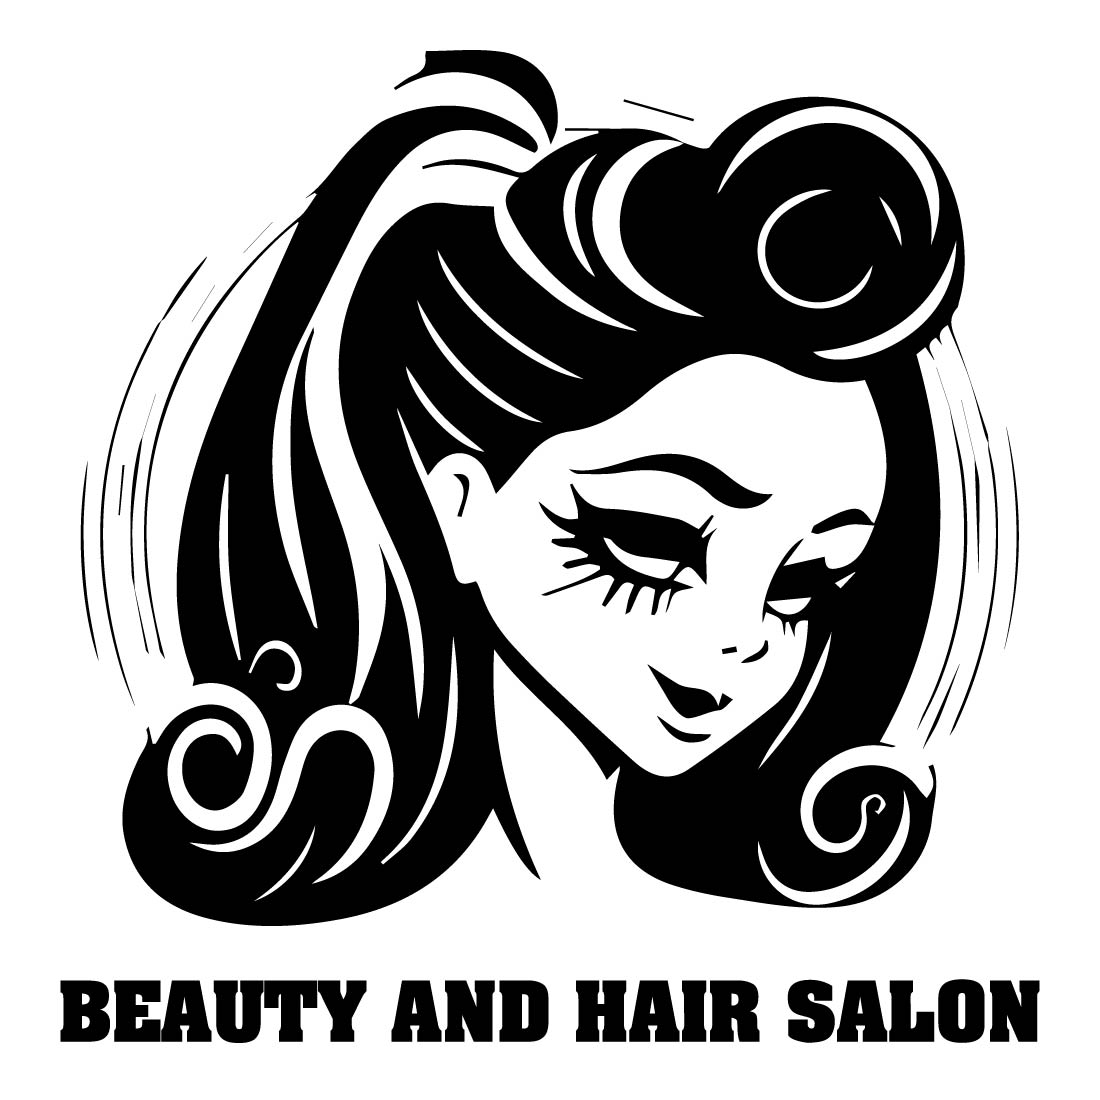 Beauty Salon Logo Illustration cover image.